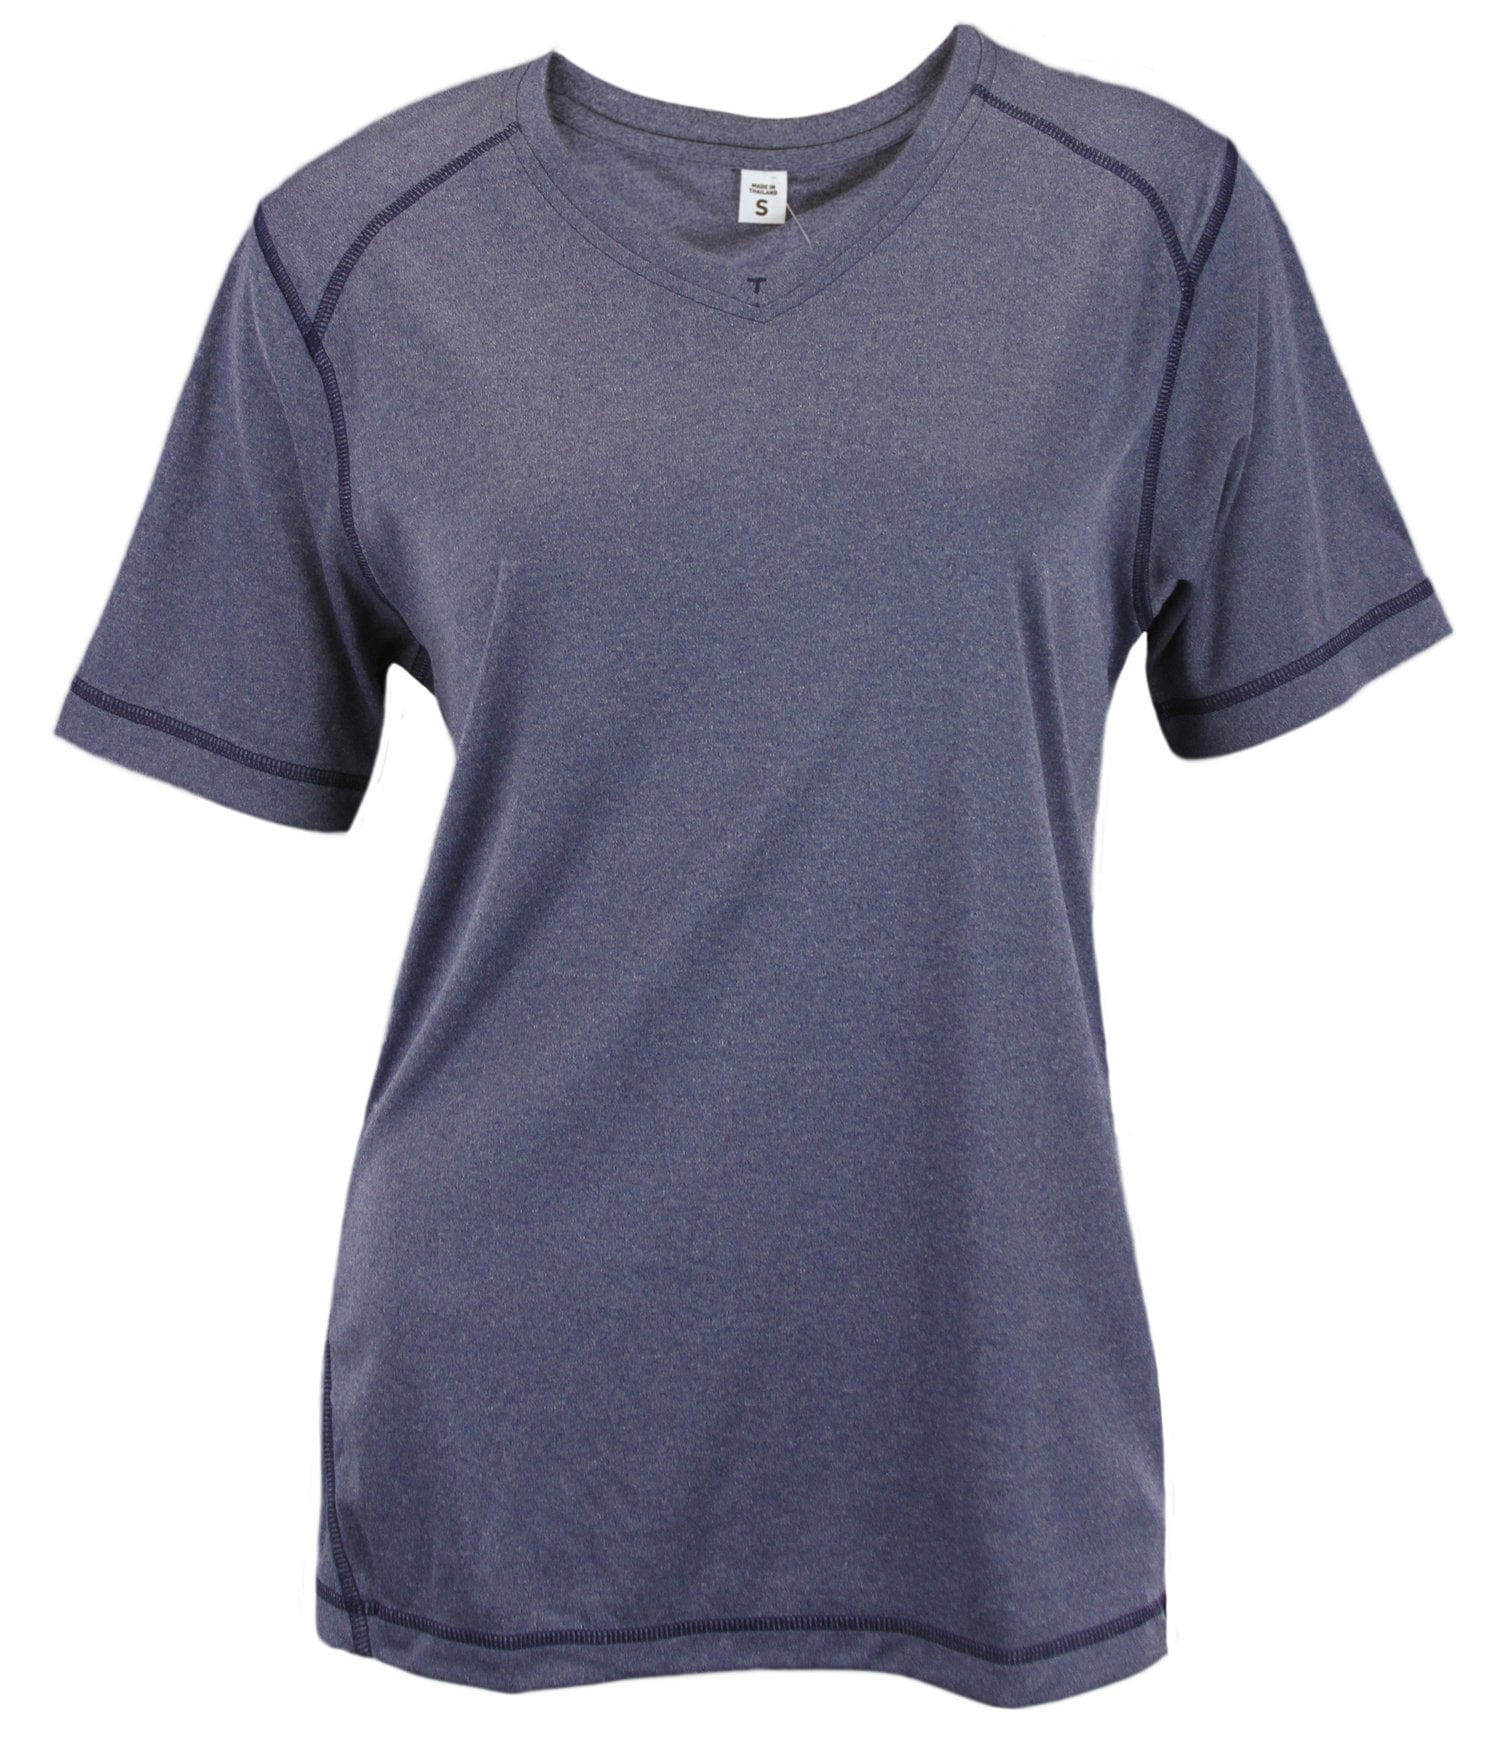 Adidas Women's Athletic Short Sleeve Climalite Tee Shirt - Many Colors ...